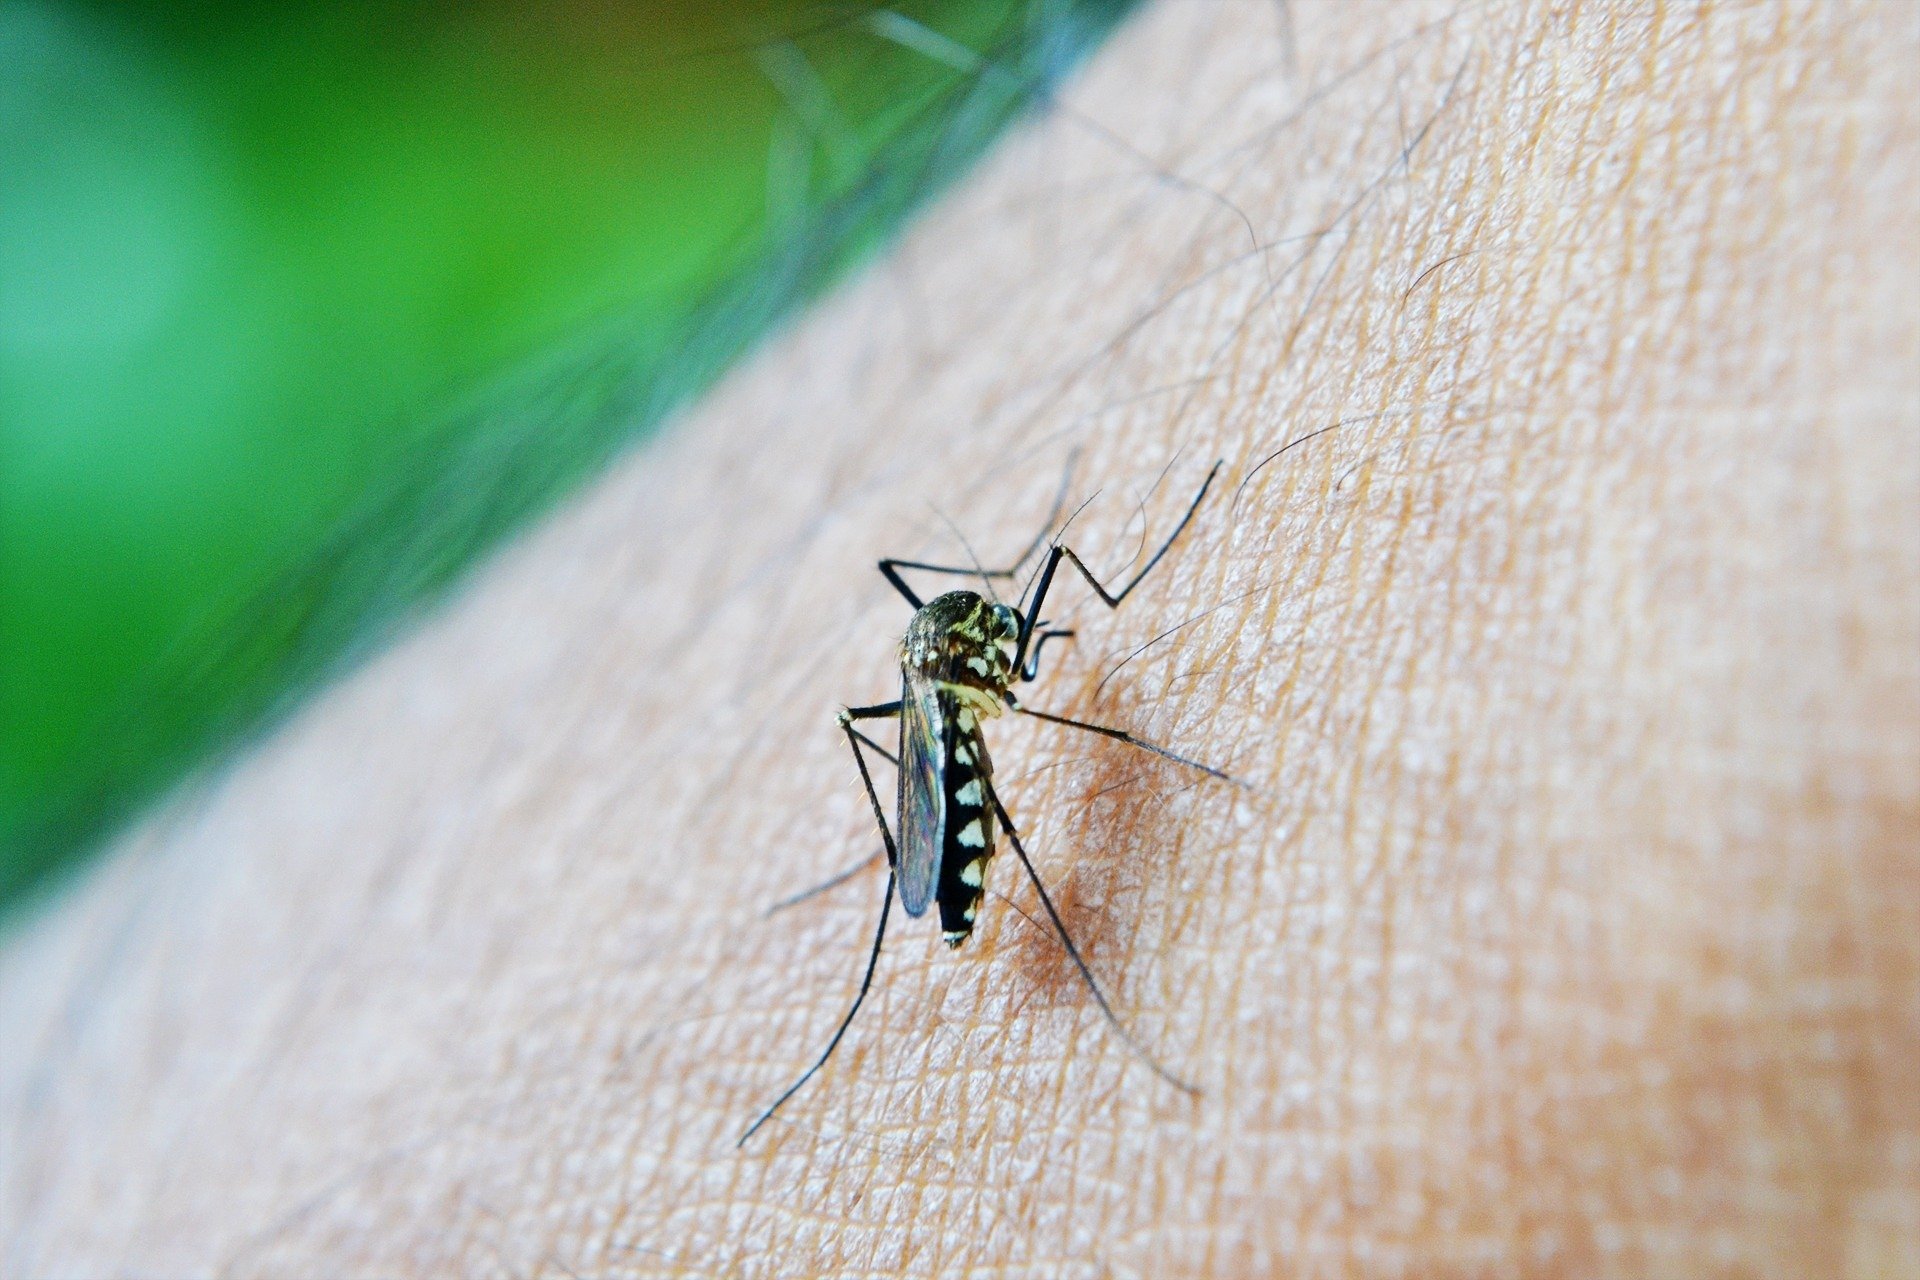 Número de mortes por dengue no RS sobe para 15